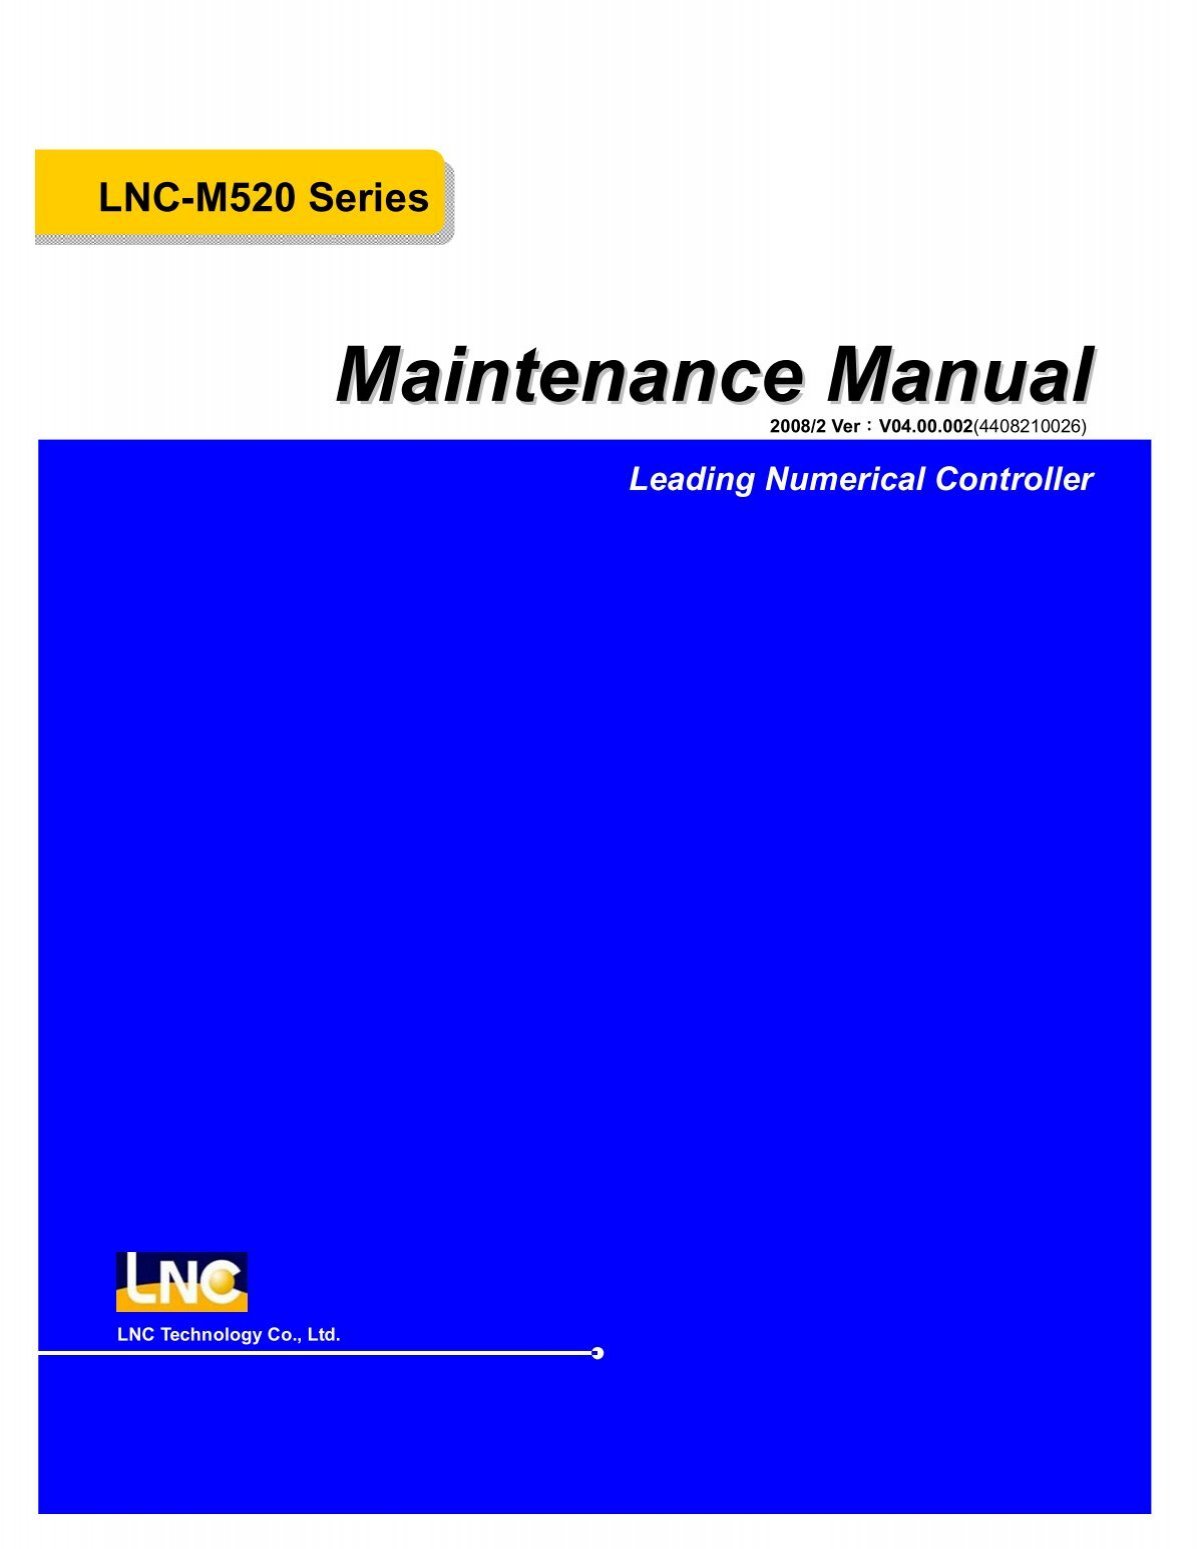 LNC-M520 Series_Maintenance_Manual-V04.00.002 